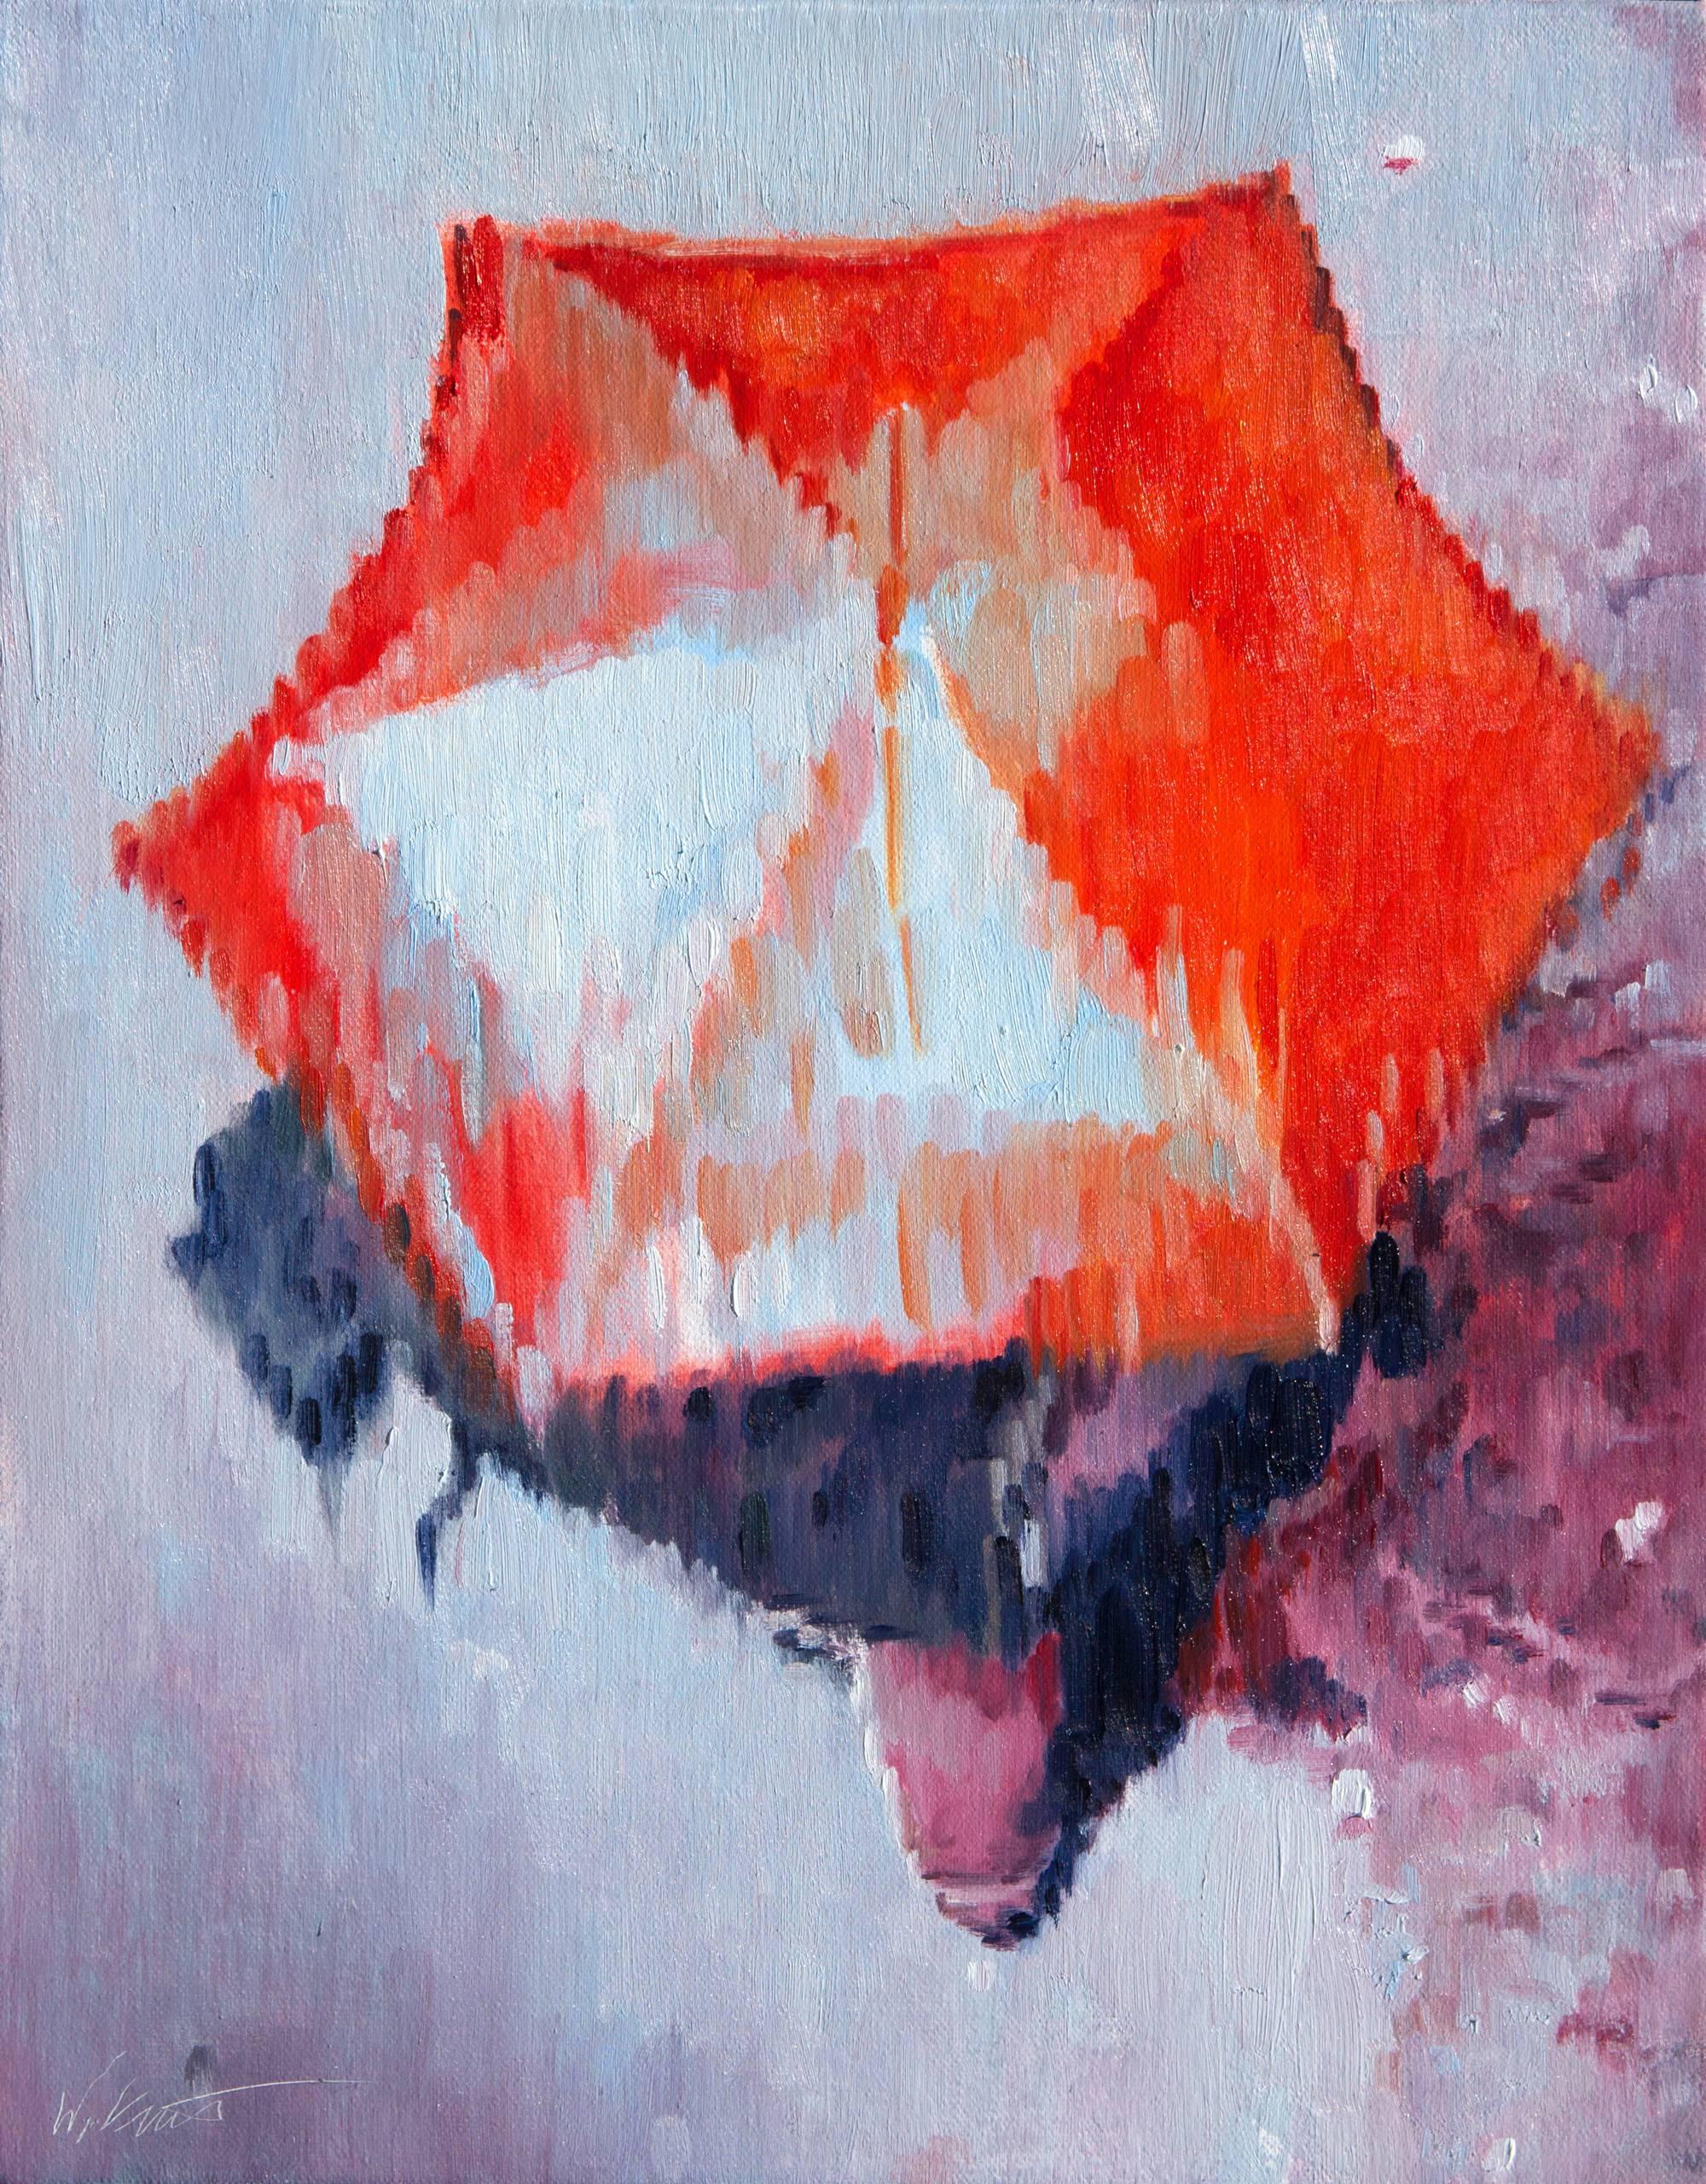 Warren Keating Portrait Painting - Red Umbrella in Paris Rain